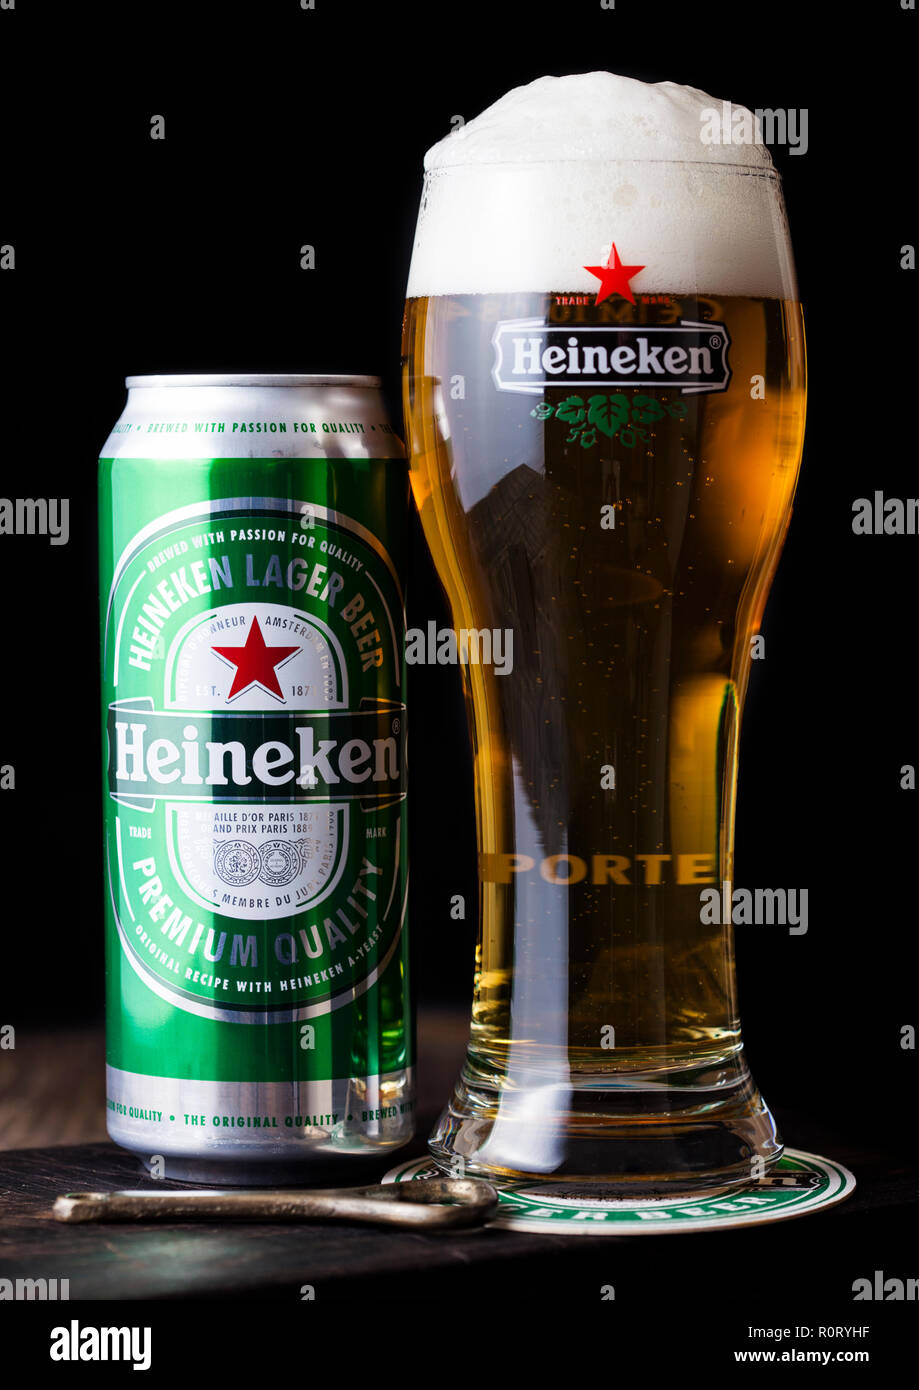 LONDON, UK - APRIL 27, 2018: Aluminium can and original glass of Heineken Lager Beer on dark wooden background. Heineken is the flagship product of He Stock Photo